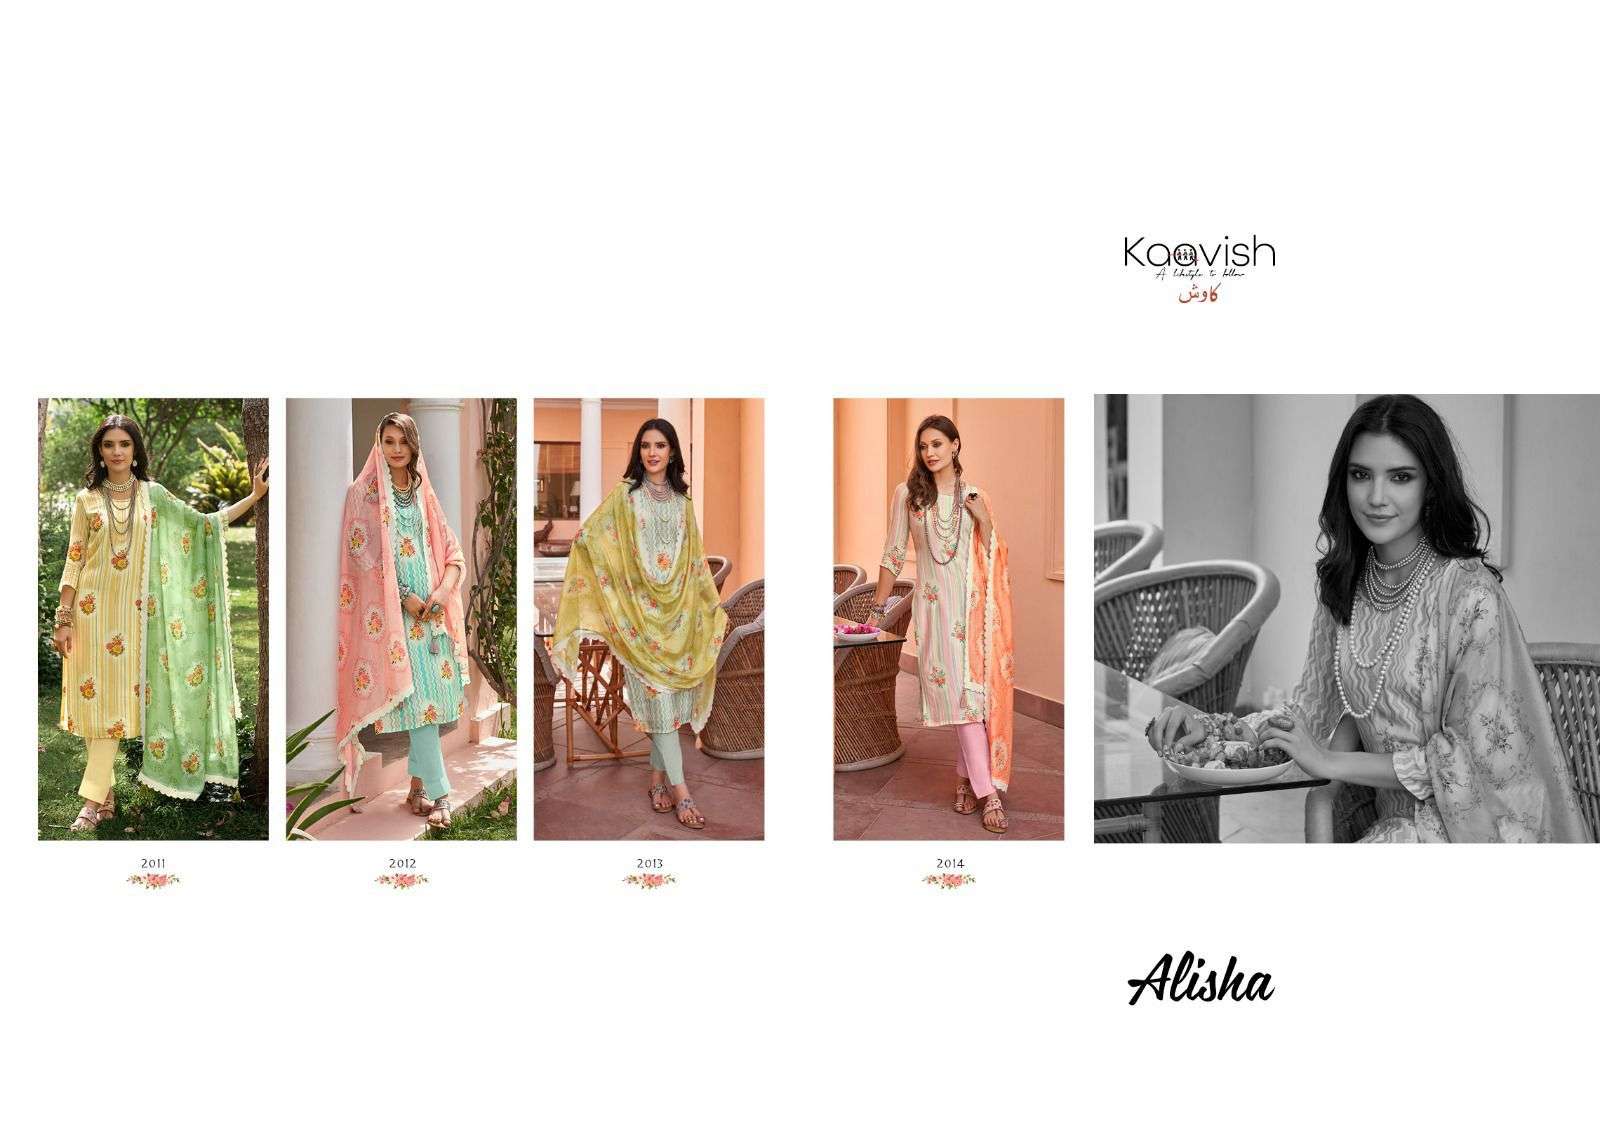 kaavish fashion alisha 2011-2014 series digital printed with work designer salwar kameez dress material surat 